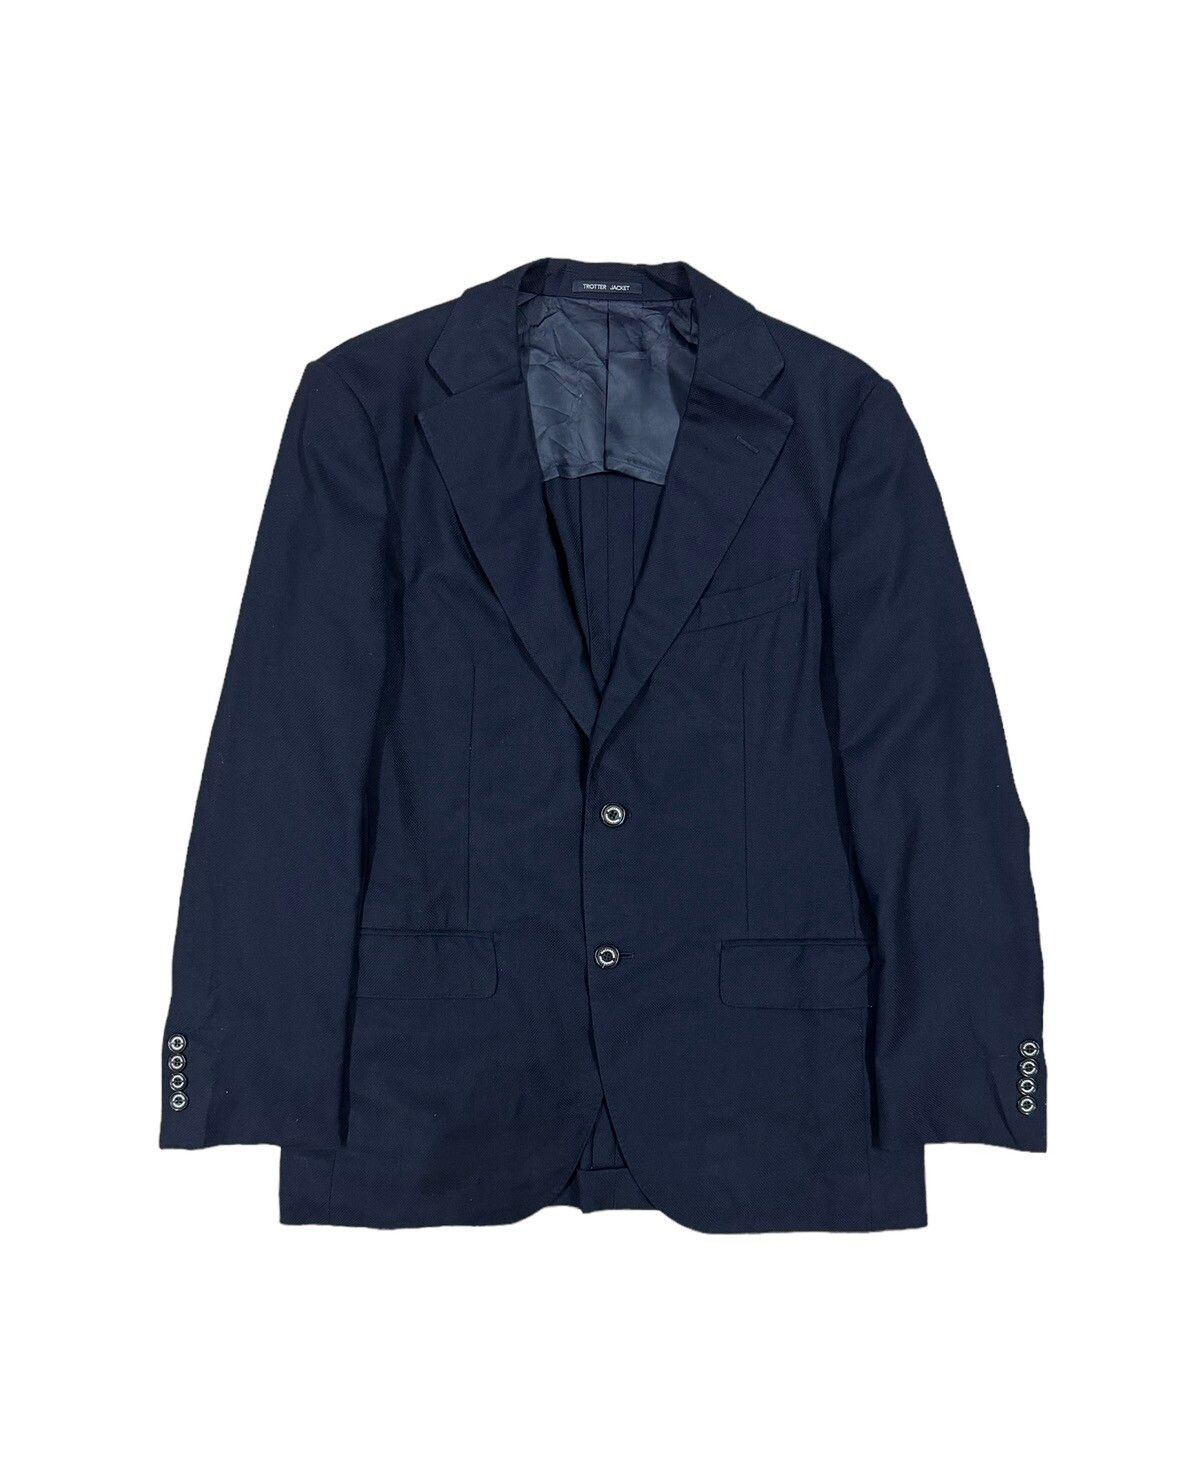 Mackintosh Philosophy Blazer Jacket Suit - 1